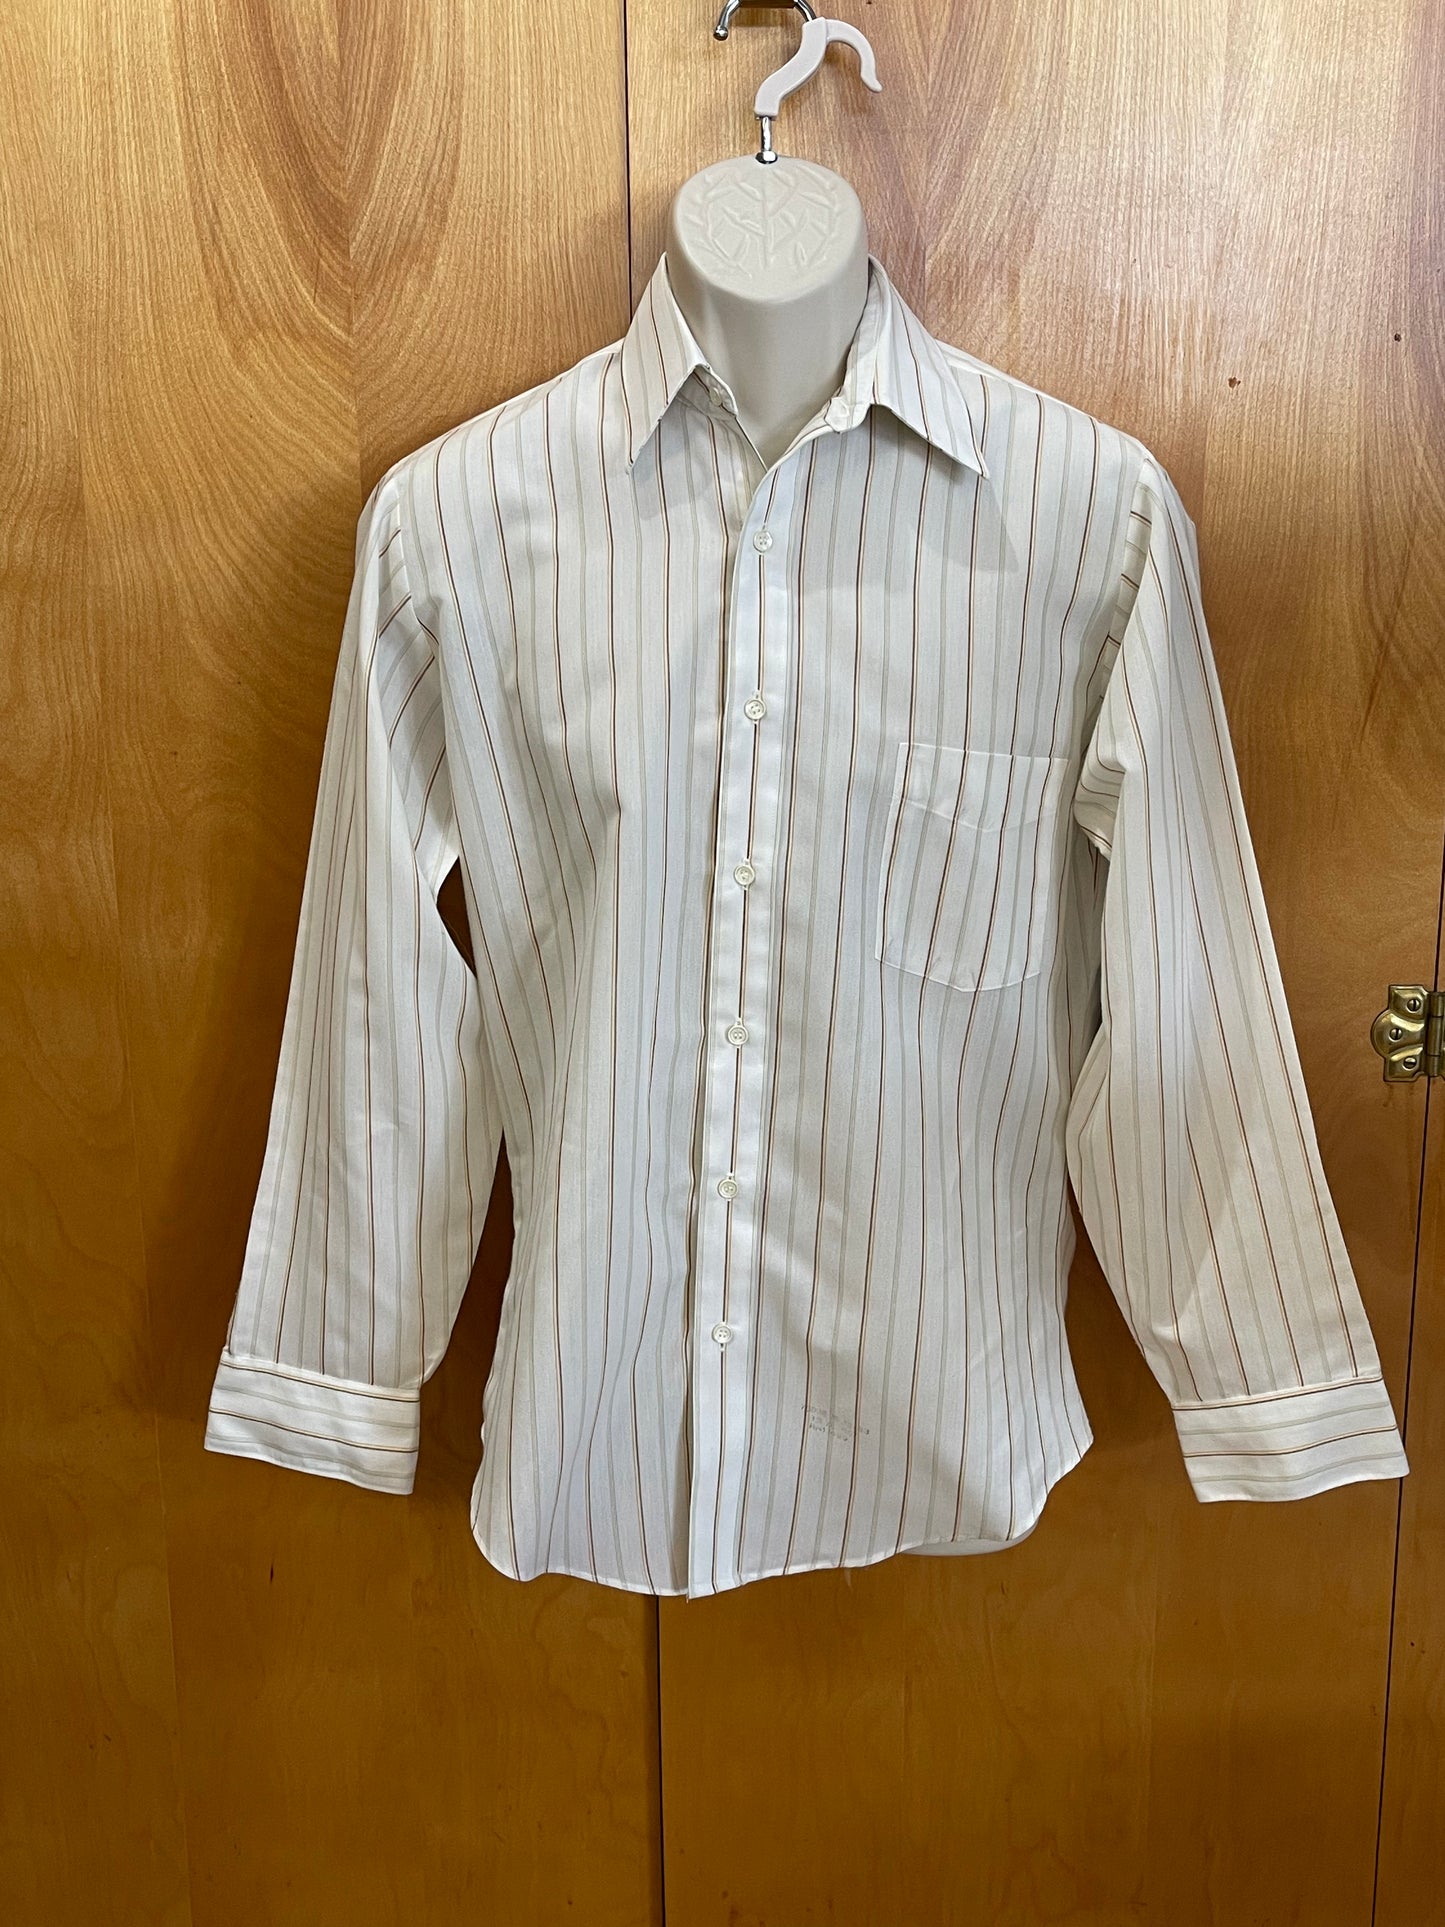 Sears Striped Dress Shirt